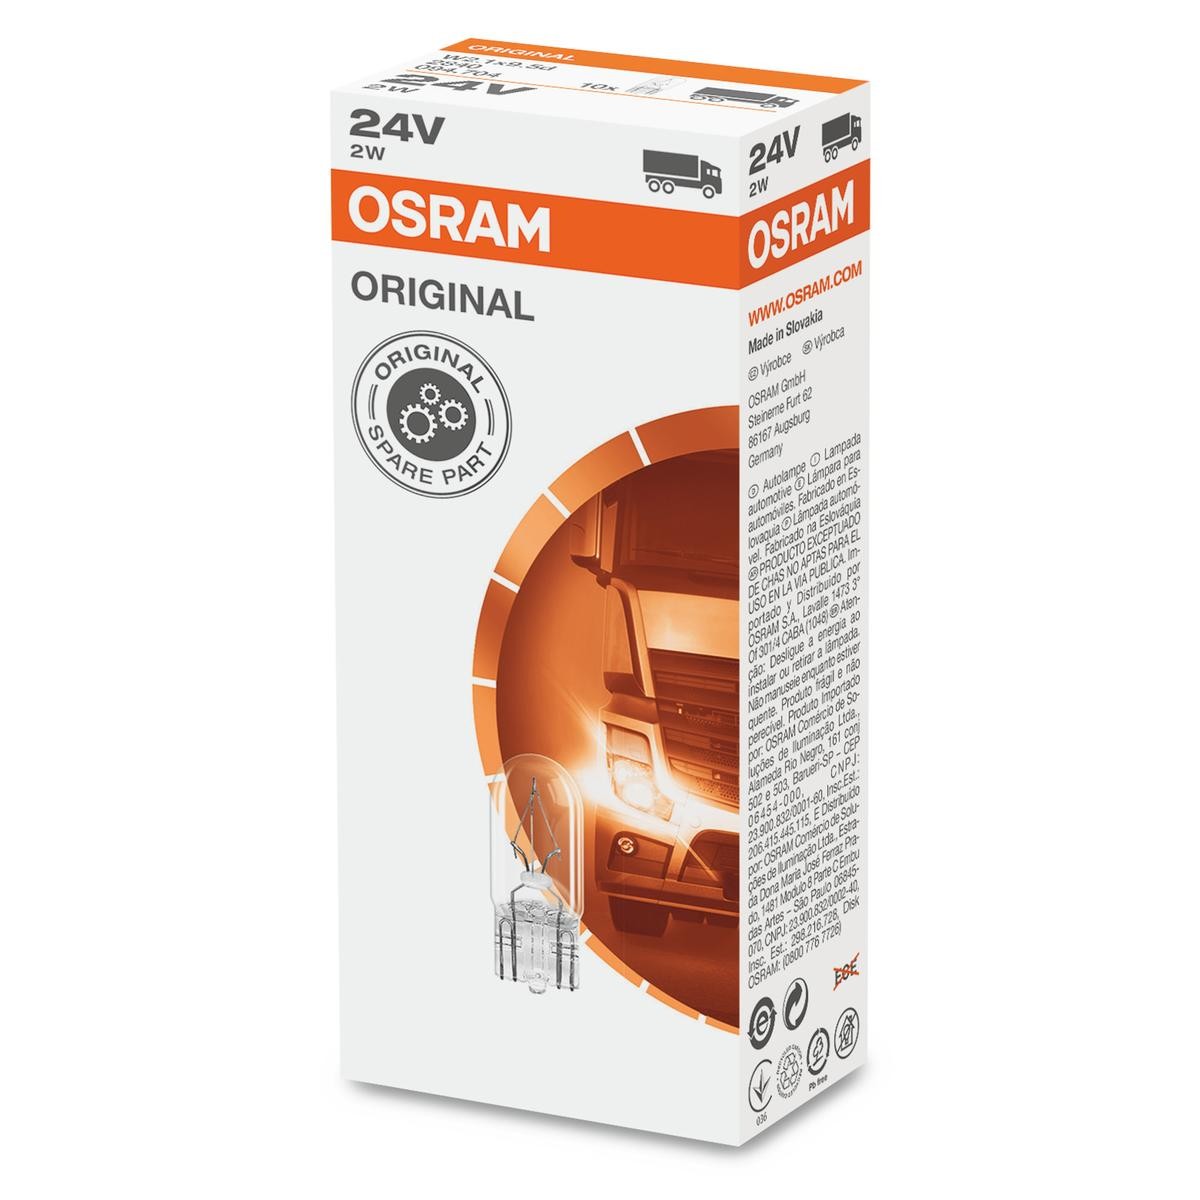 OSRAM ORIGINAL LINE Socket Bulb, 24V, 2W Bulb, interior light 2840 buy